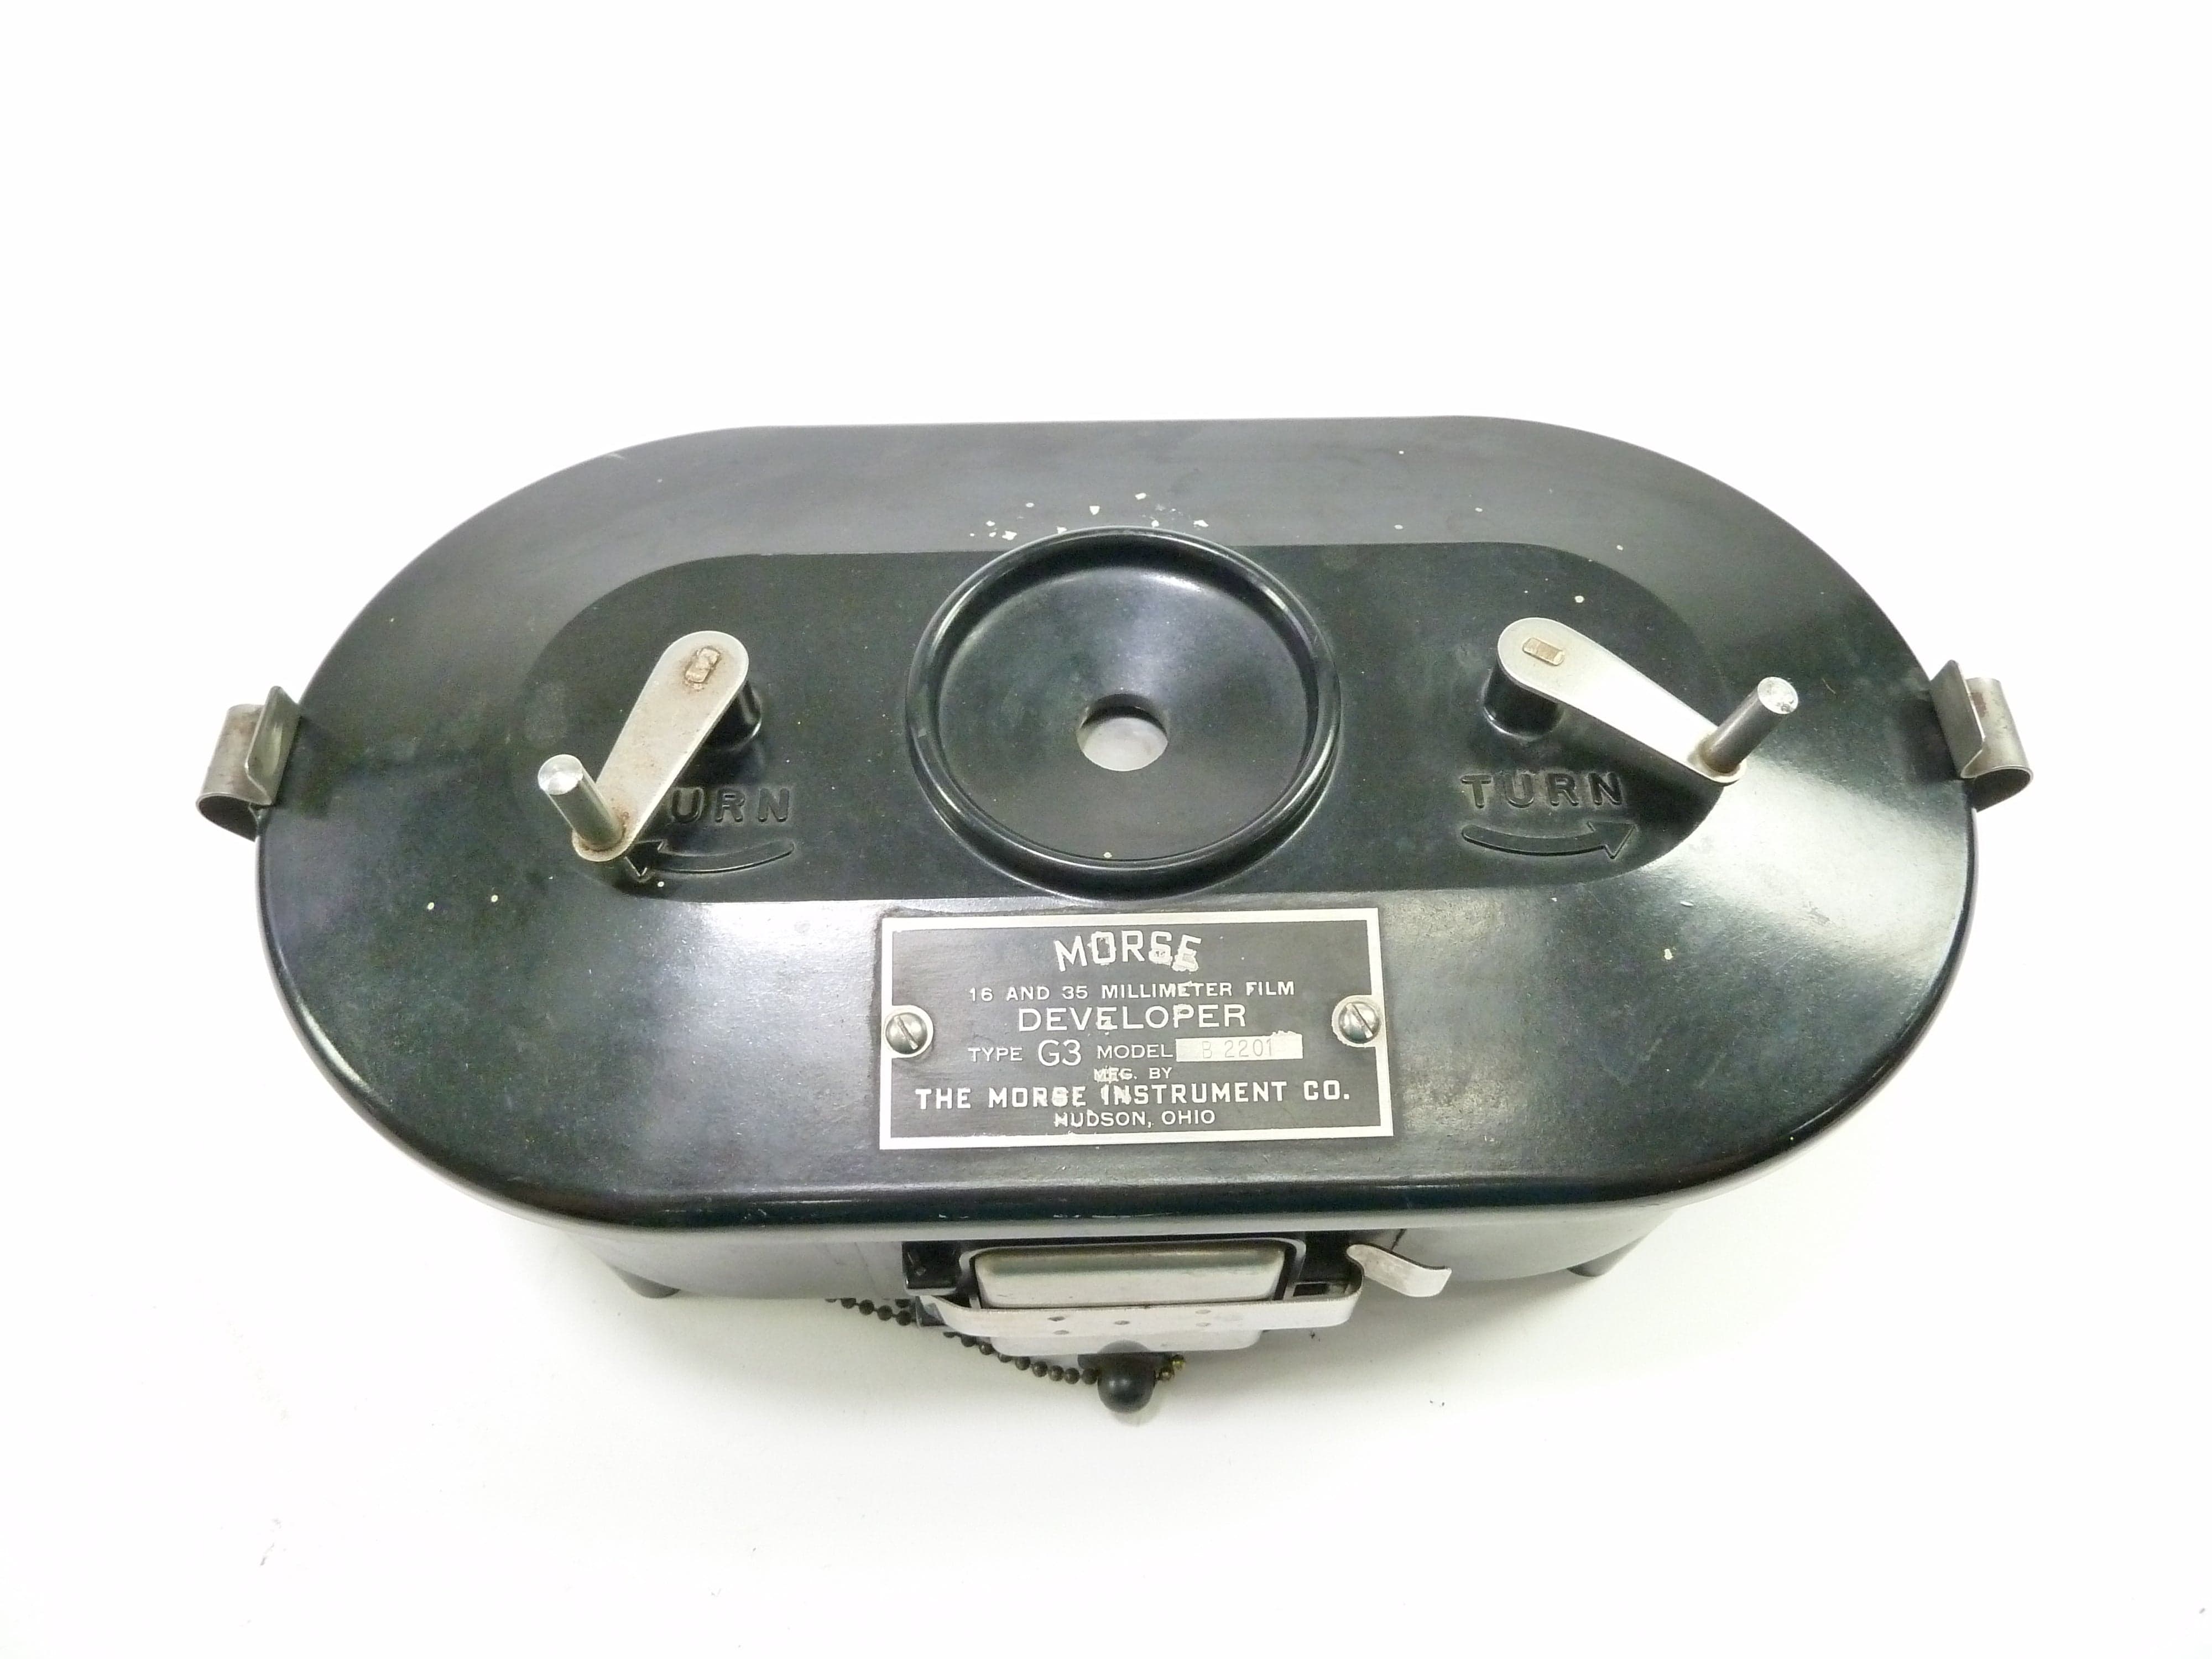 Morse G3 Developer Portable 16mm + 35mm Film Developing Tank